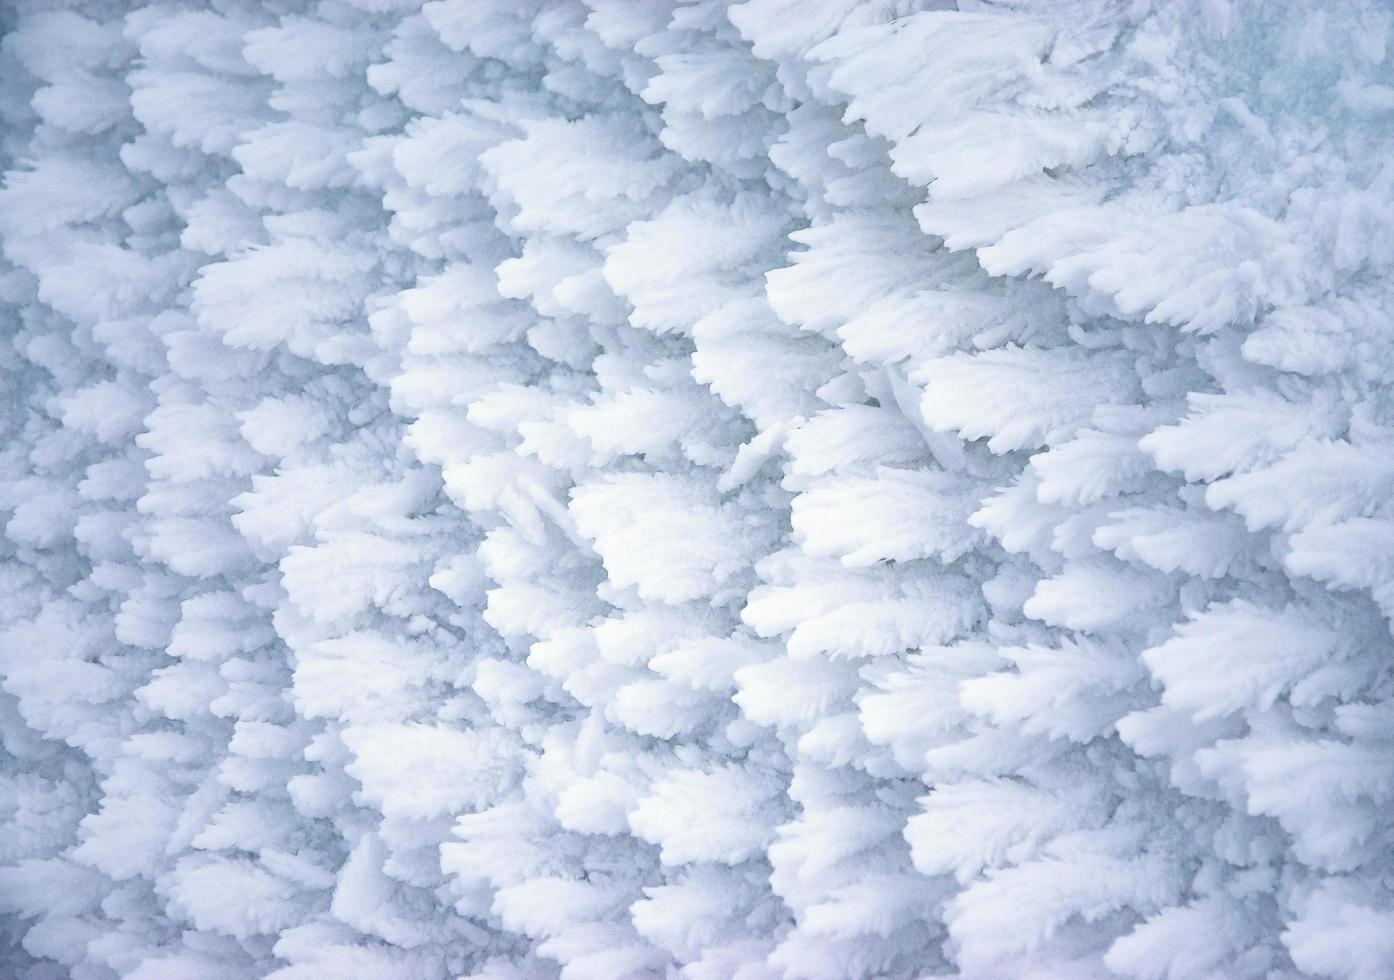 asas de gelo na neve congelada foto